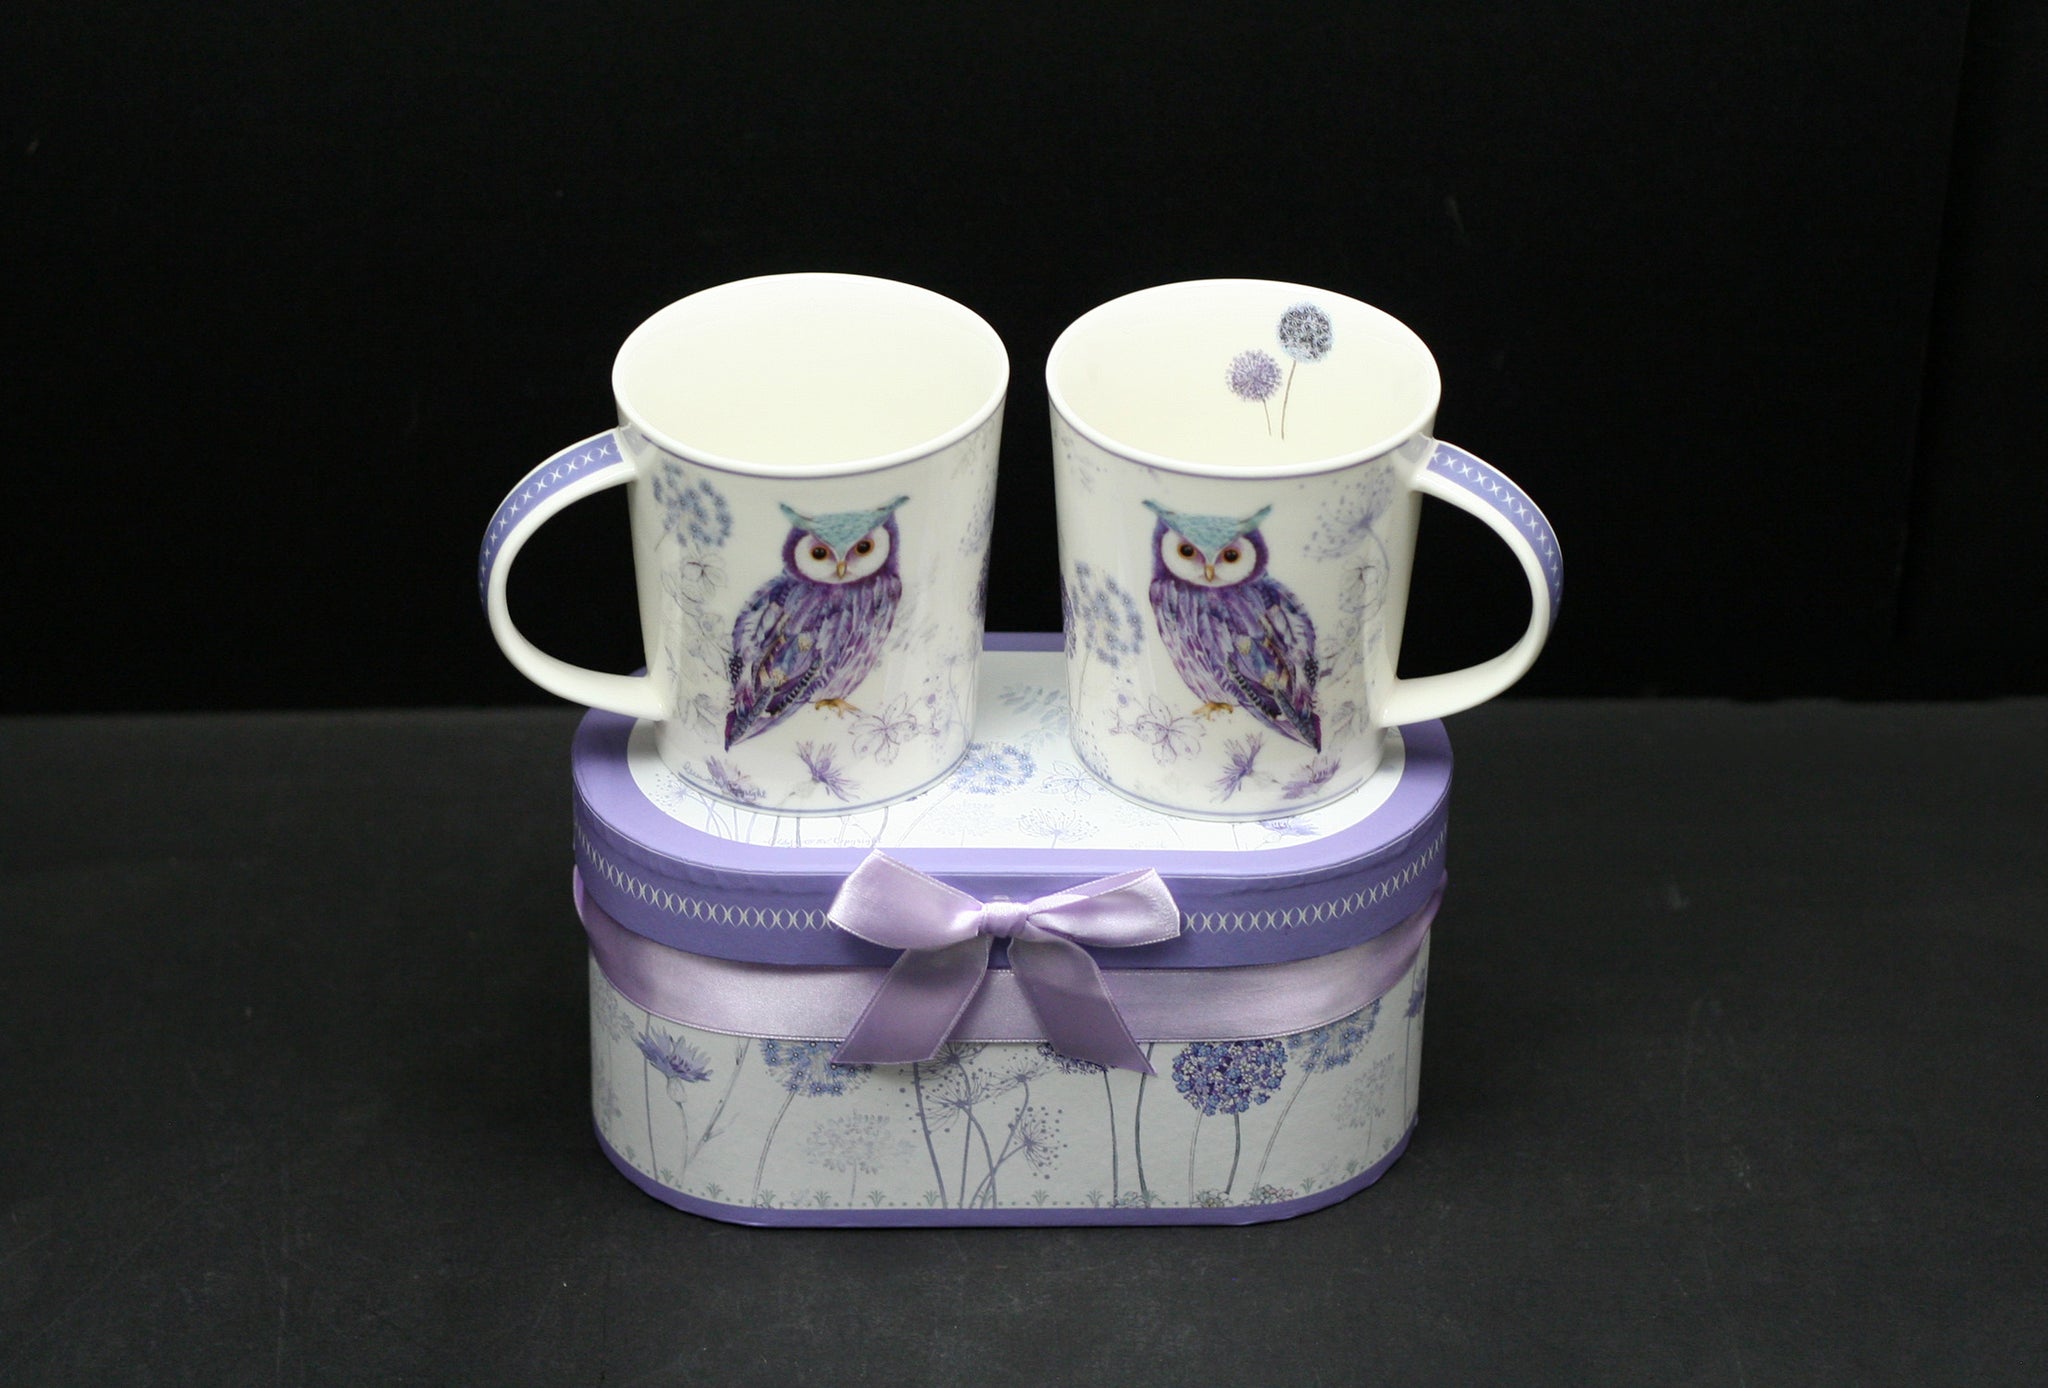 S/2 Mugs (350 ml) in a Gift Box – Owl